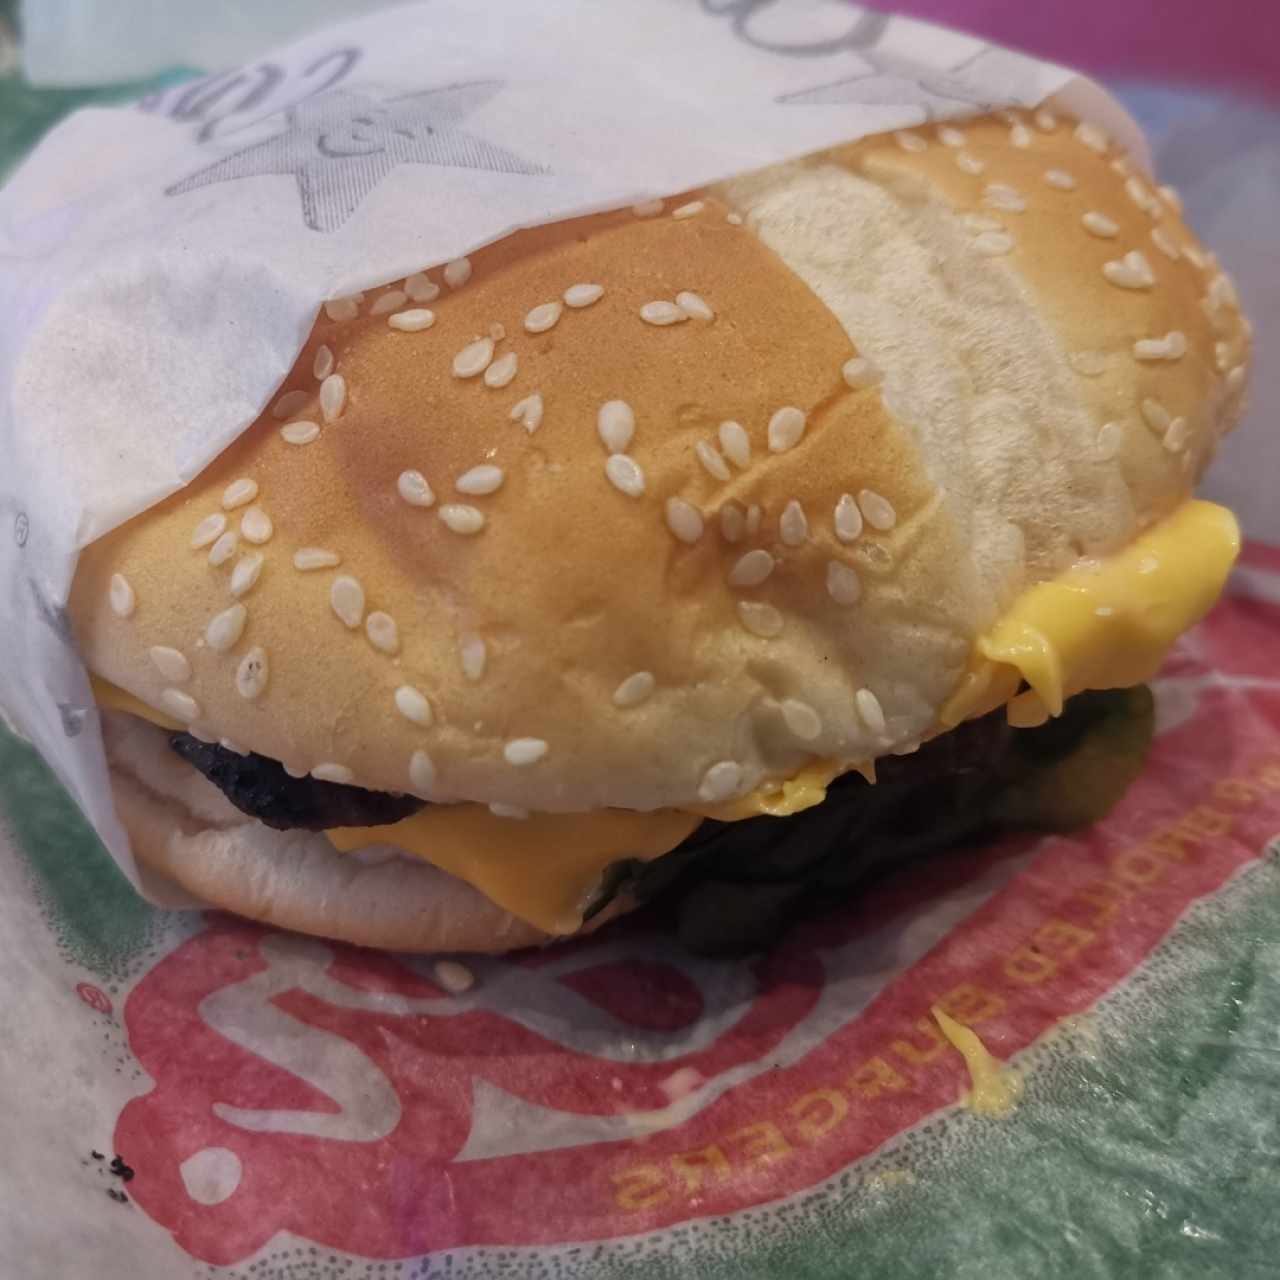 The Big Carl Burger